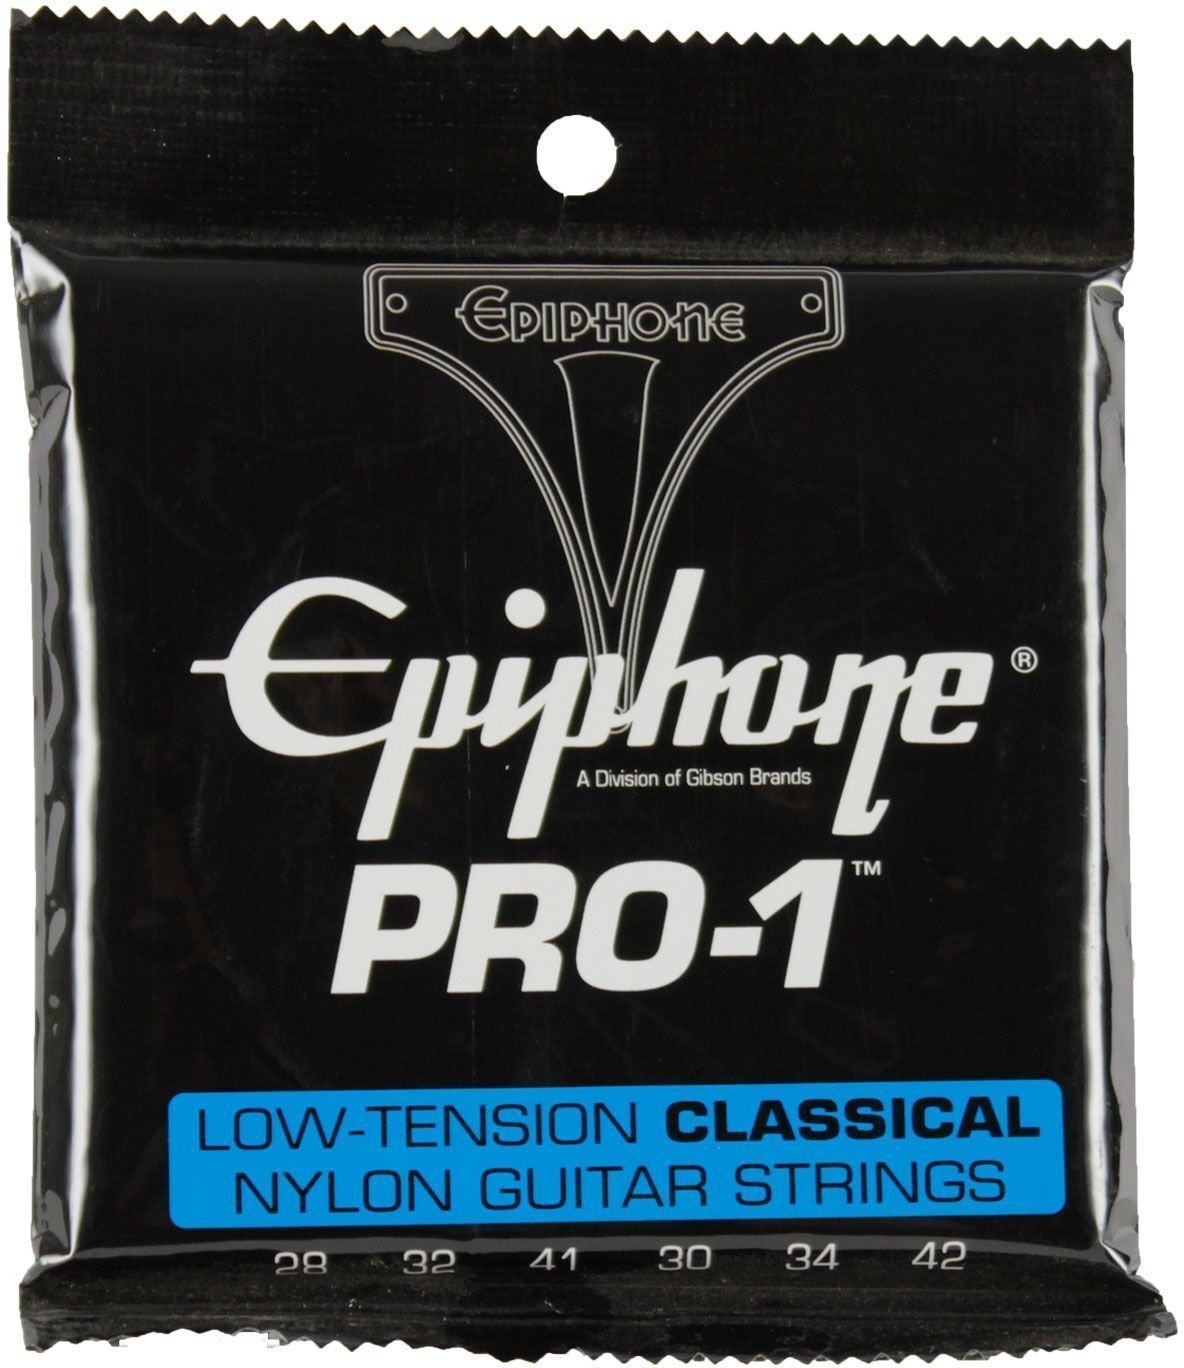 Nylonové struny pre klasickú gitaru Epiphone Pro-1 Ultra-Light Classical Strings